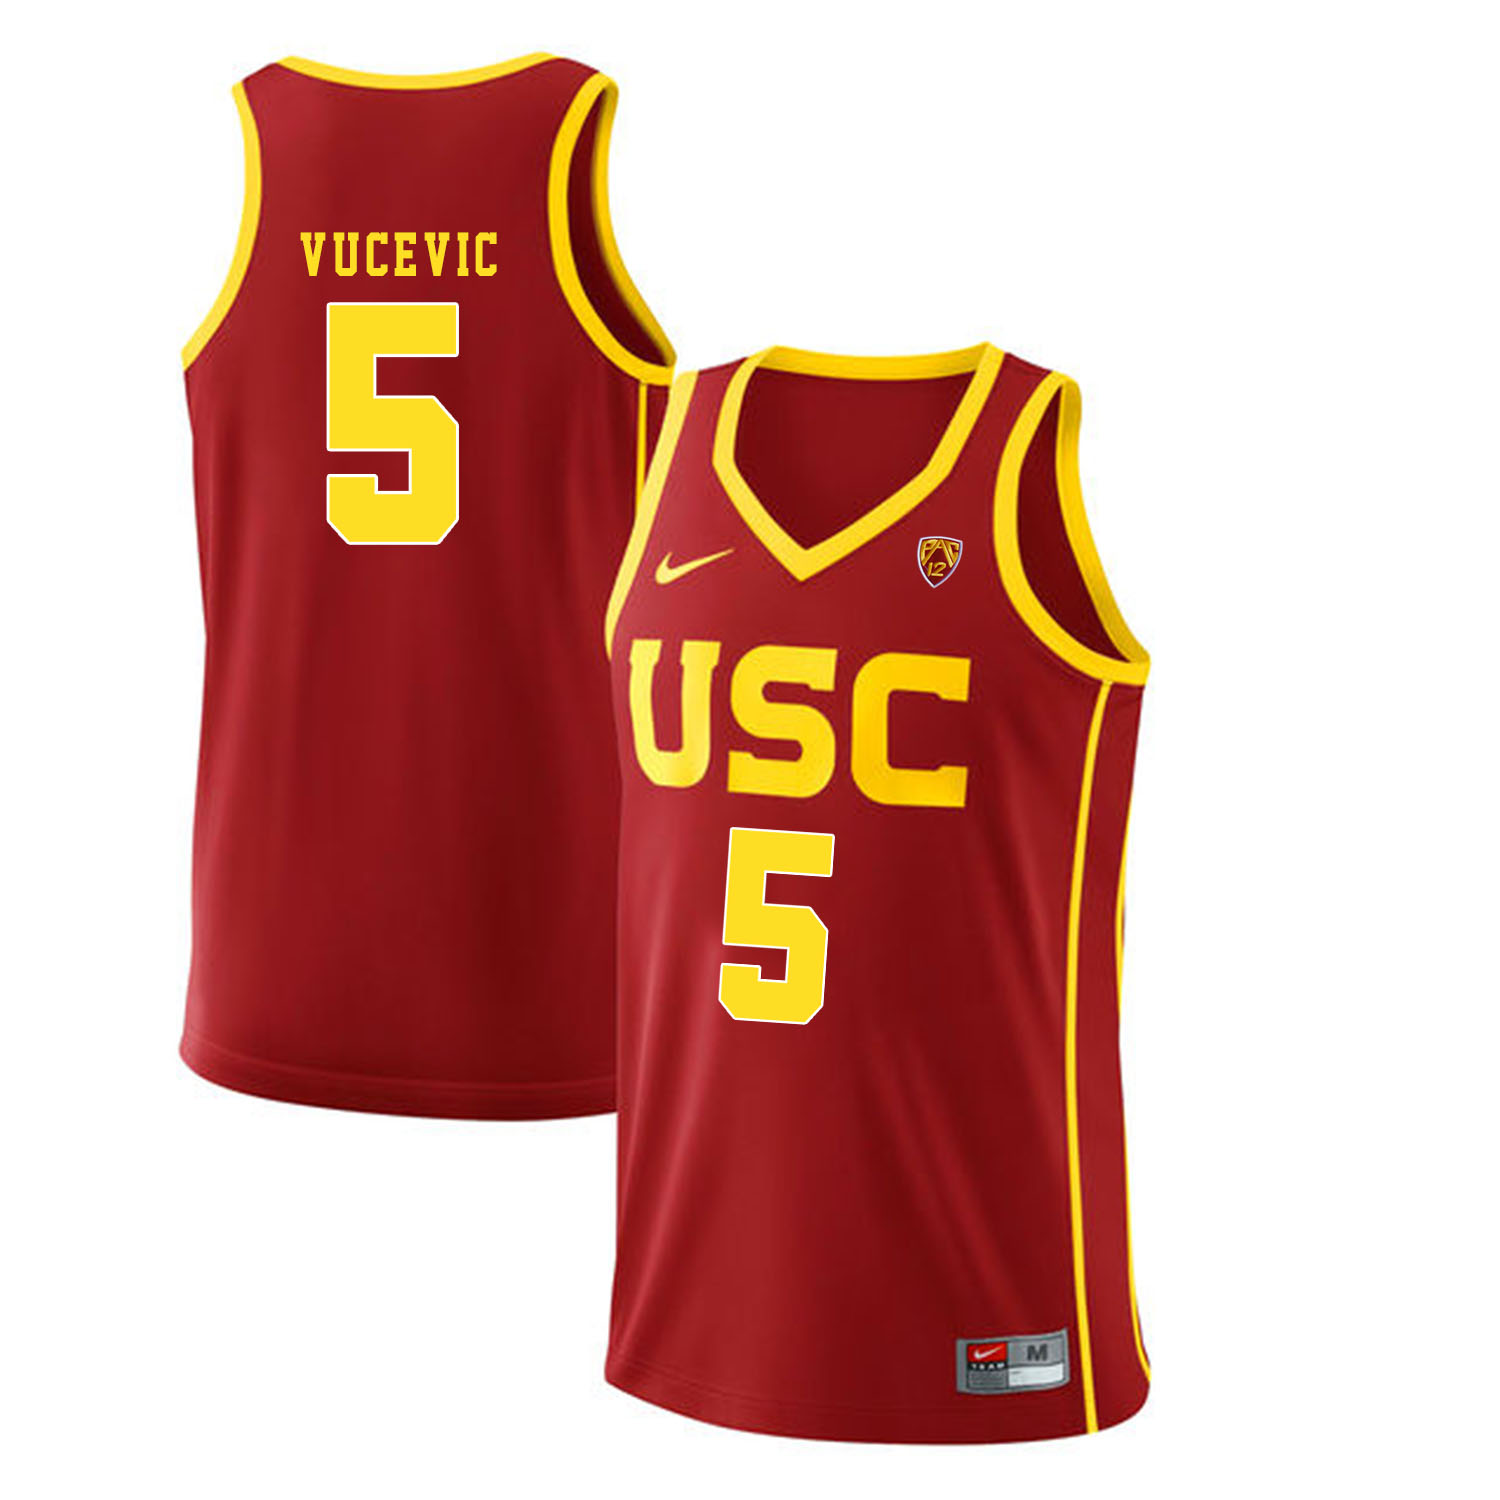 USC Trojans 5 Nikola Vucevic Red College Basketball Jersey